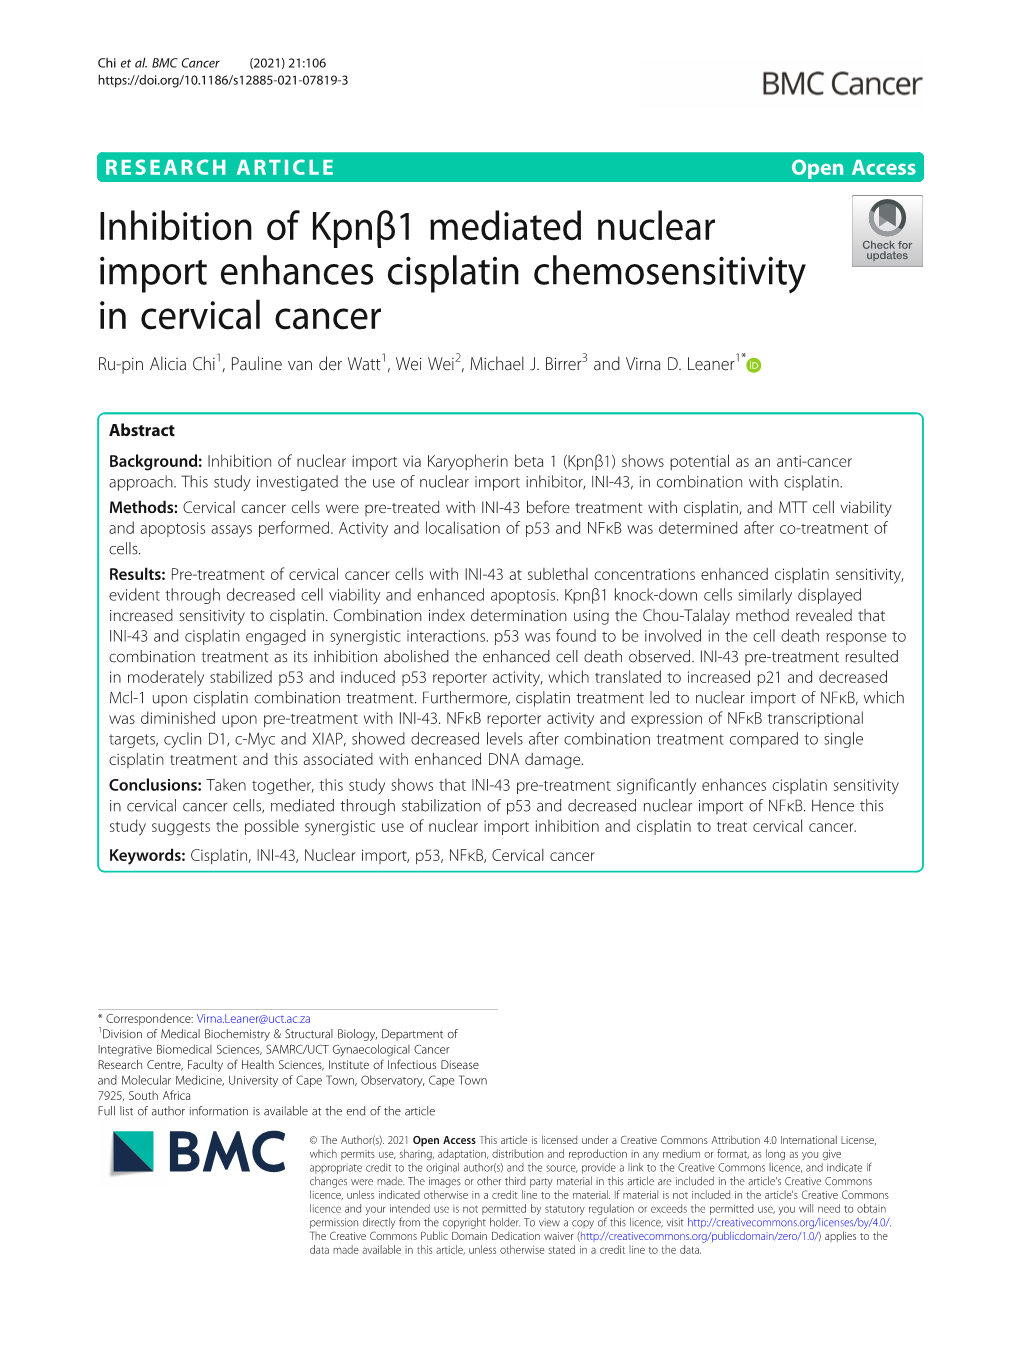 Inhibition of Kpnβ1 Mediated Nuclear Import Enhances Cisplatin Chemosensitivity in Cervical Cancer Ru-Pin Alicia Chi1, Pauline Van Der Watt1, Wei Wei2, Michael J